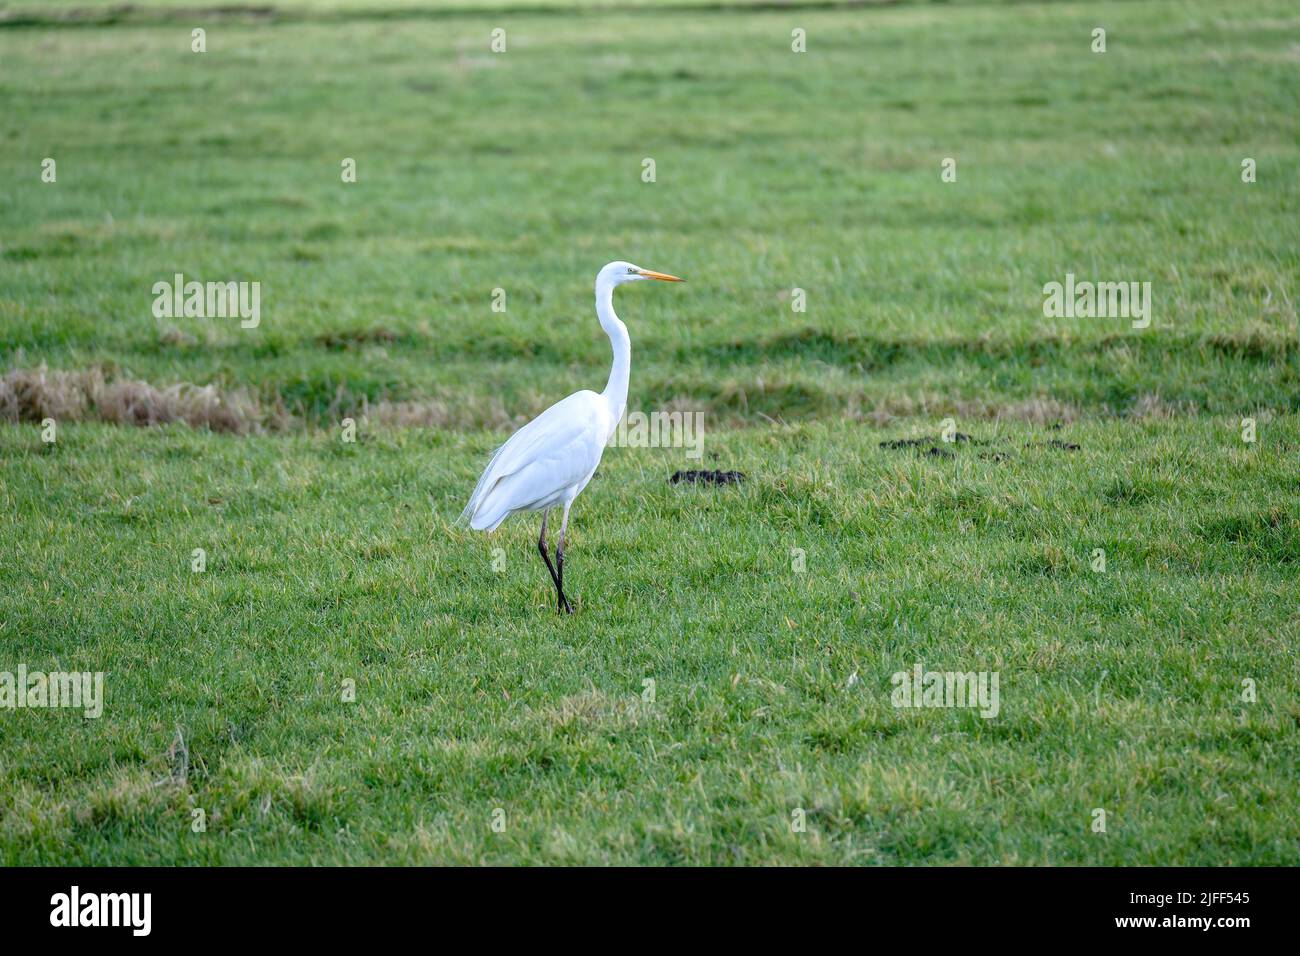 A single Great White Egret, White Heron, walking in a meadow Stock Photo